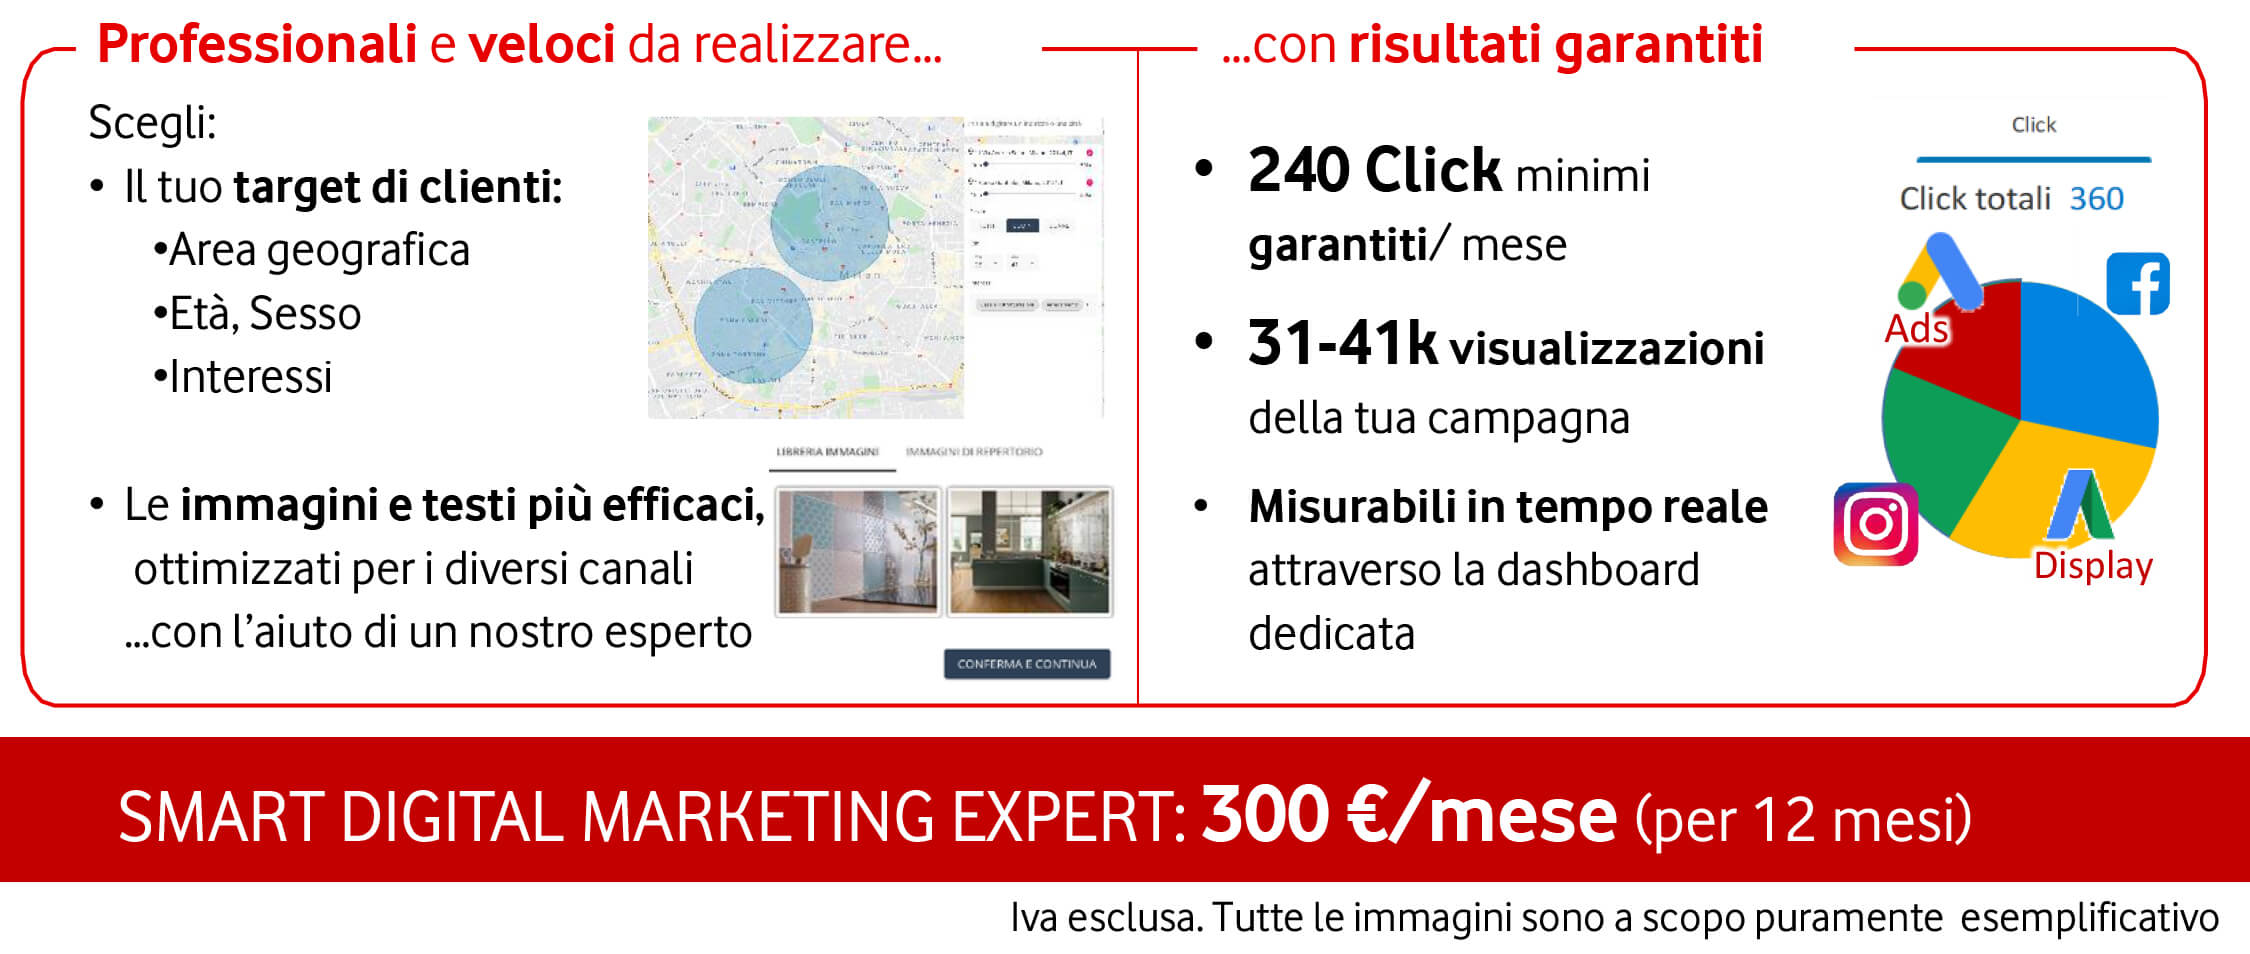 Smart Digital Marketing Expert da 300€/mese